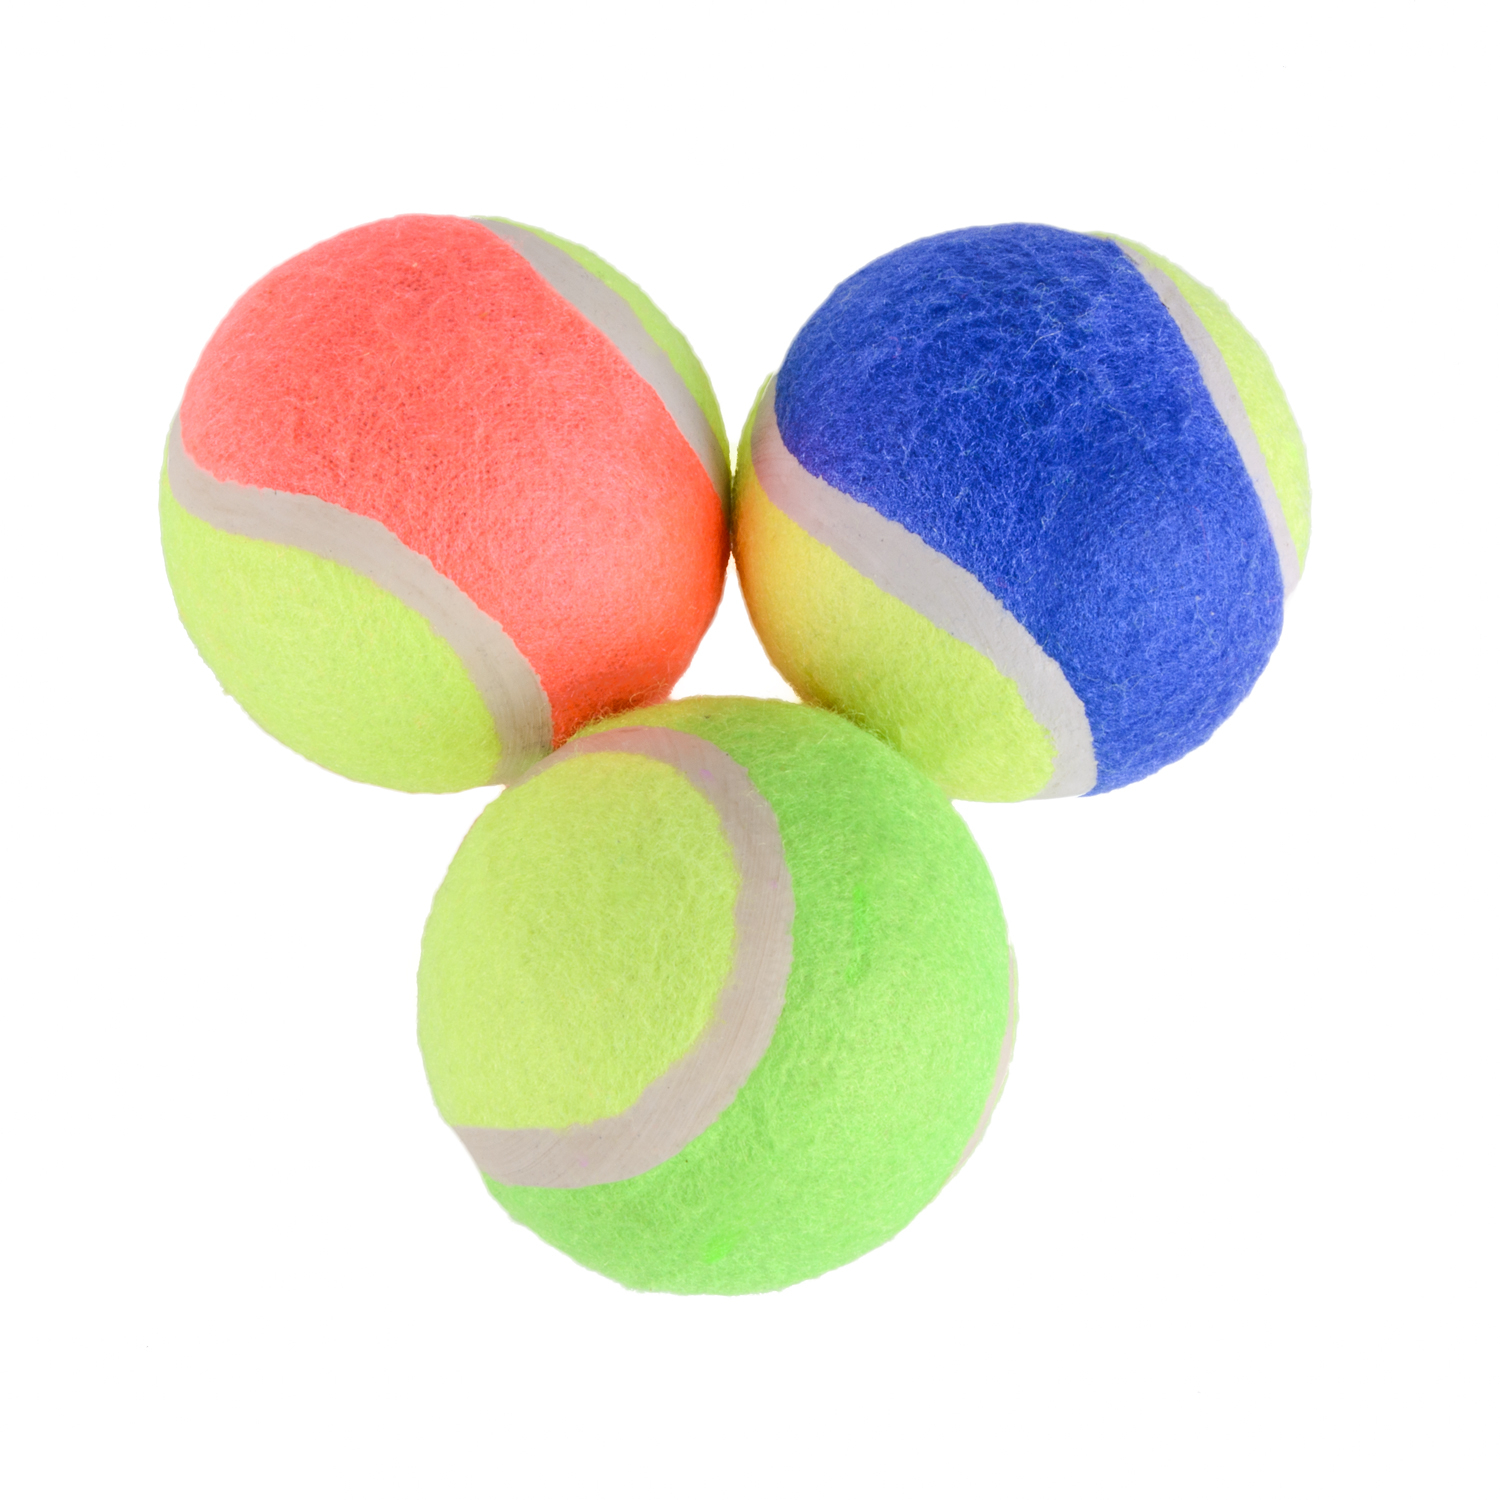 Tennisball für Hunde, 1,59 €